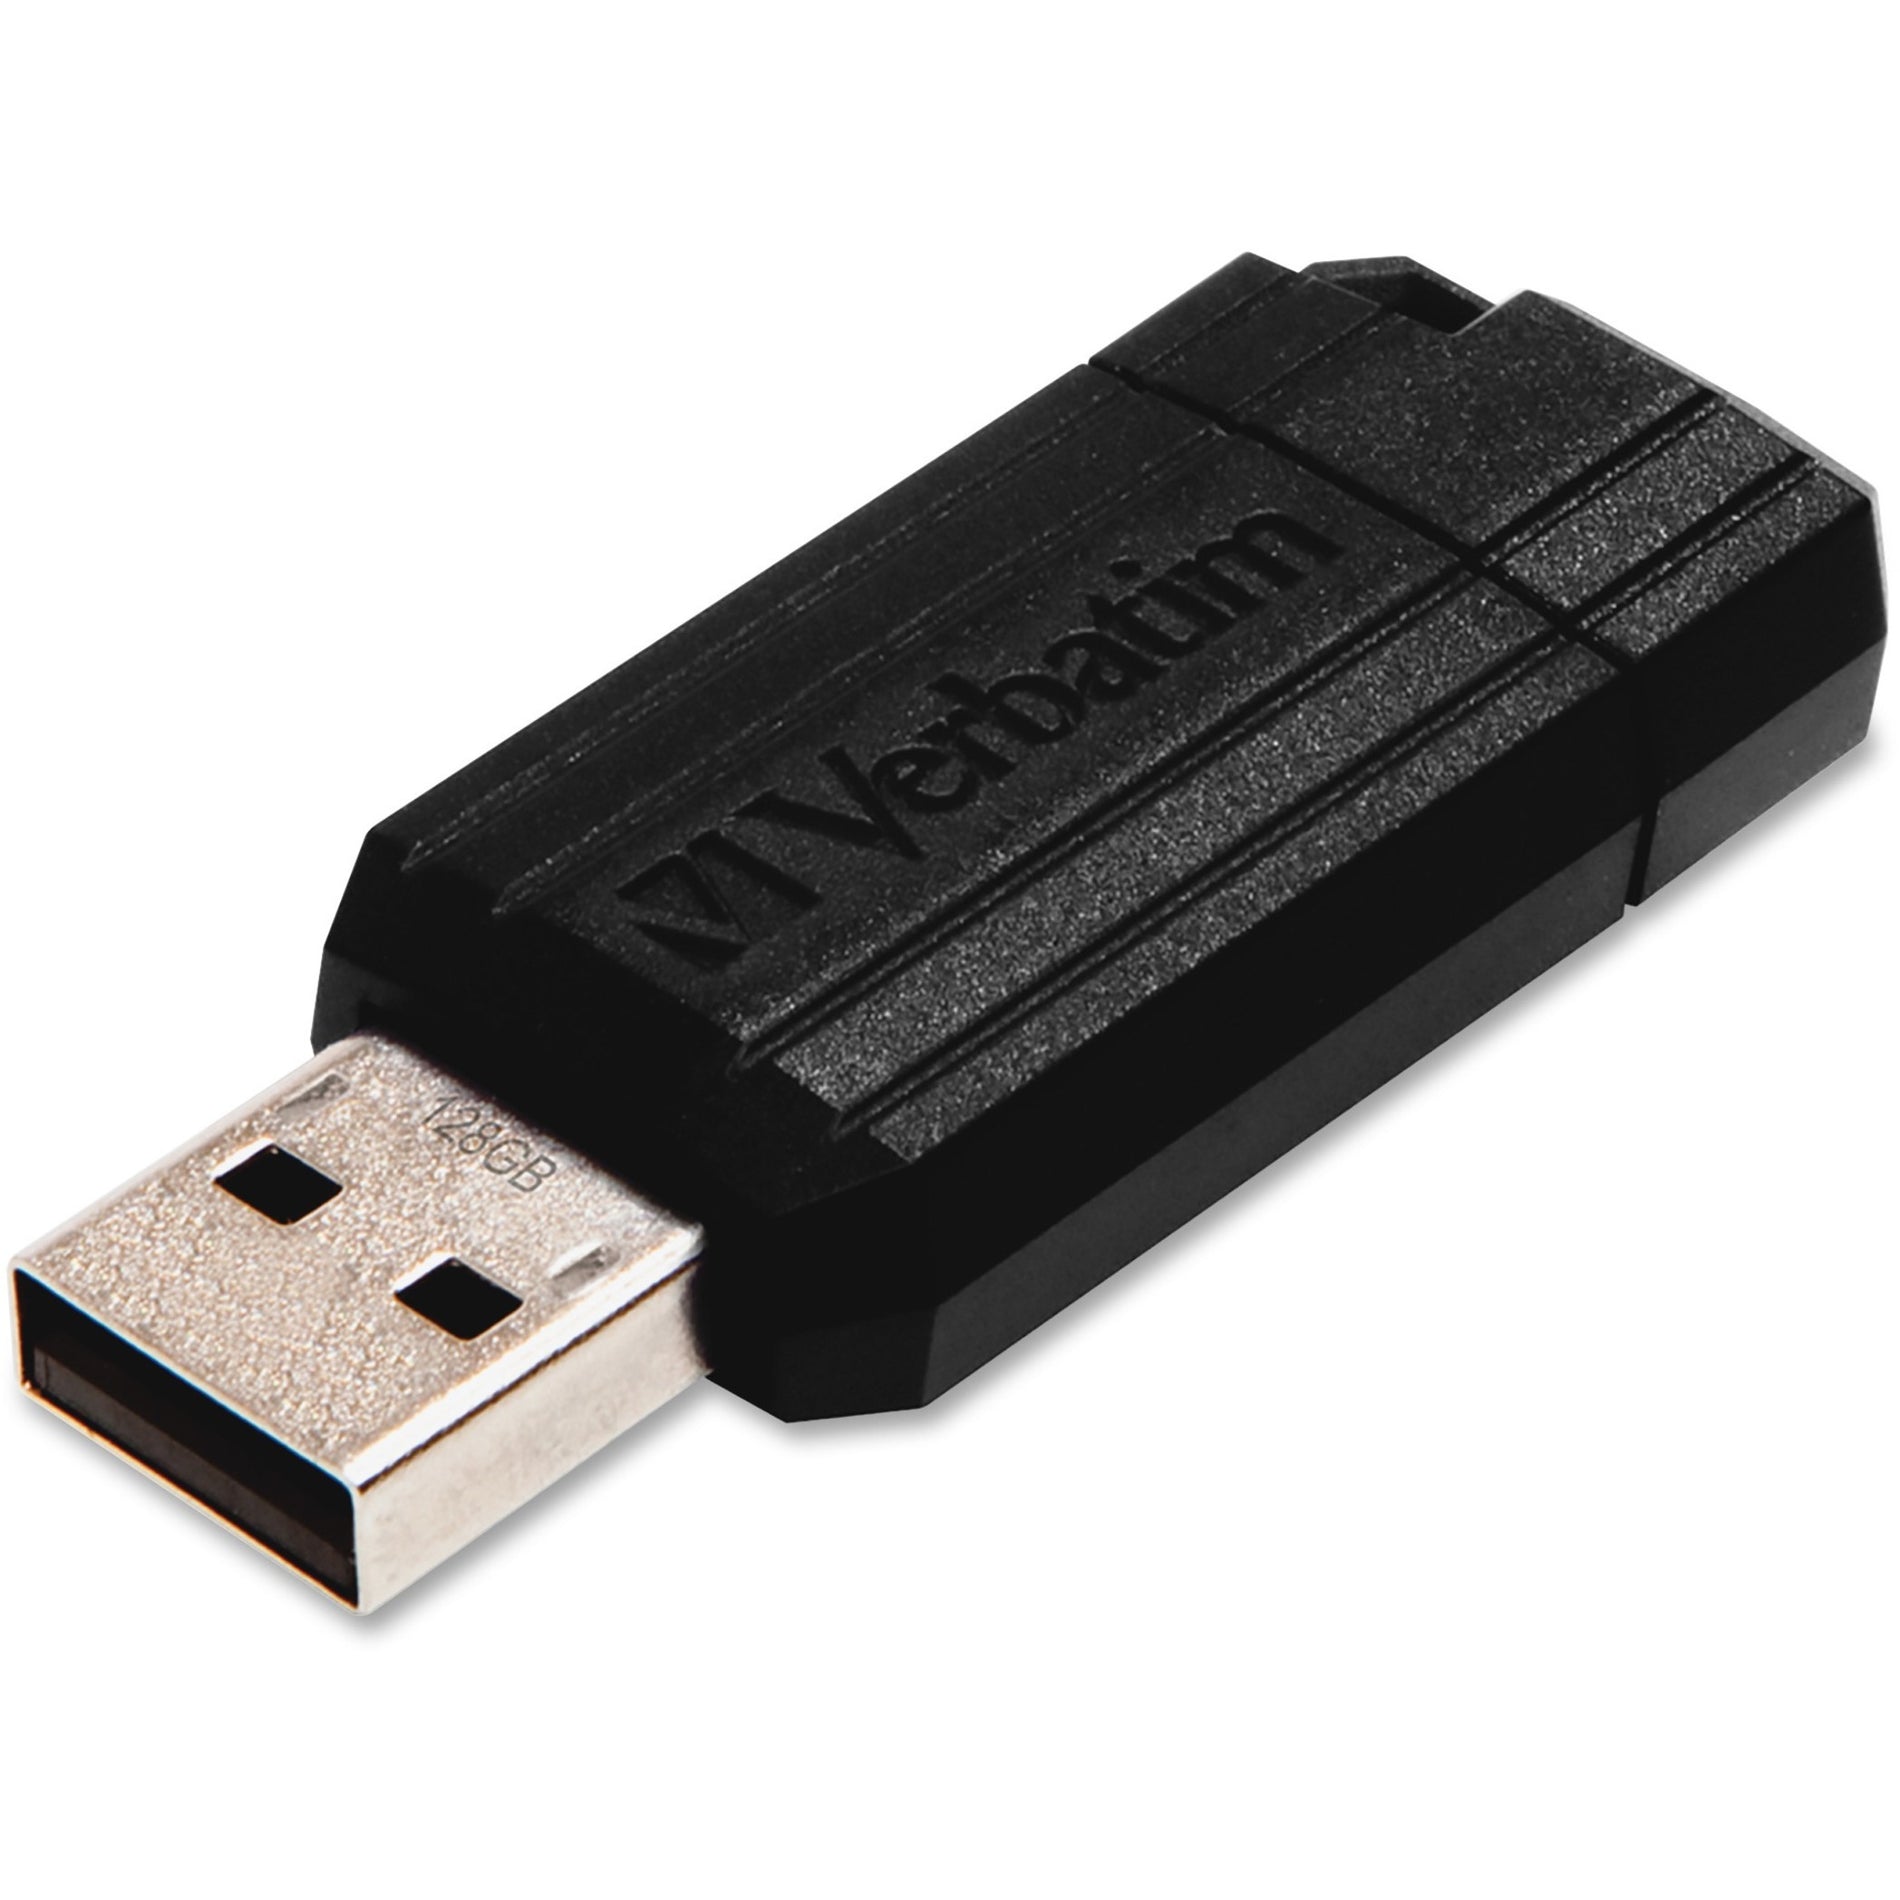 Microban 49071 PinStripe 128GB USB Flash Drive, Lightweight, Password Protection, Retractable